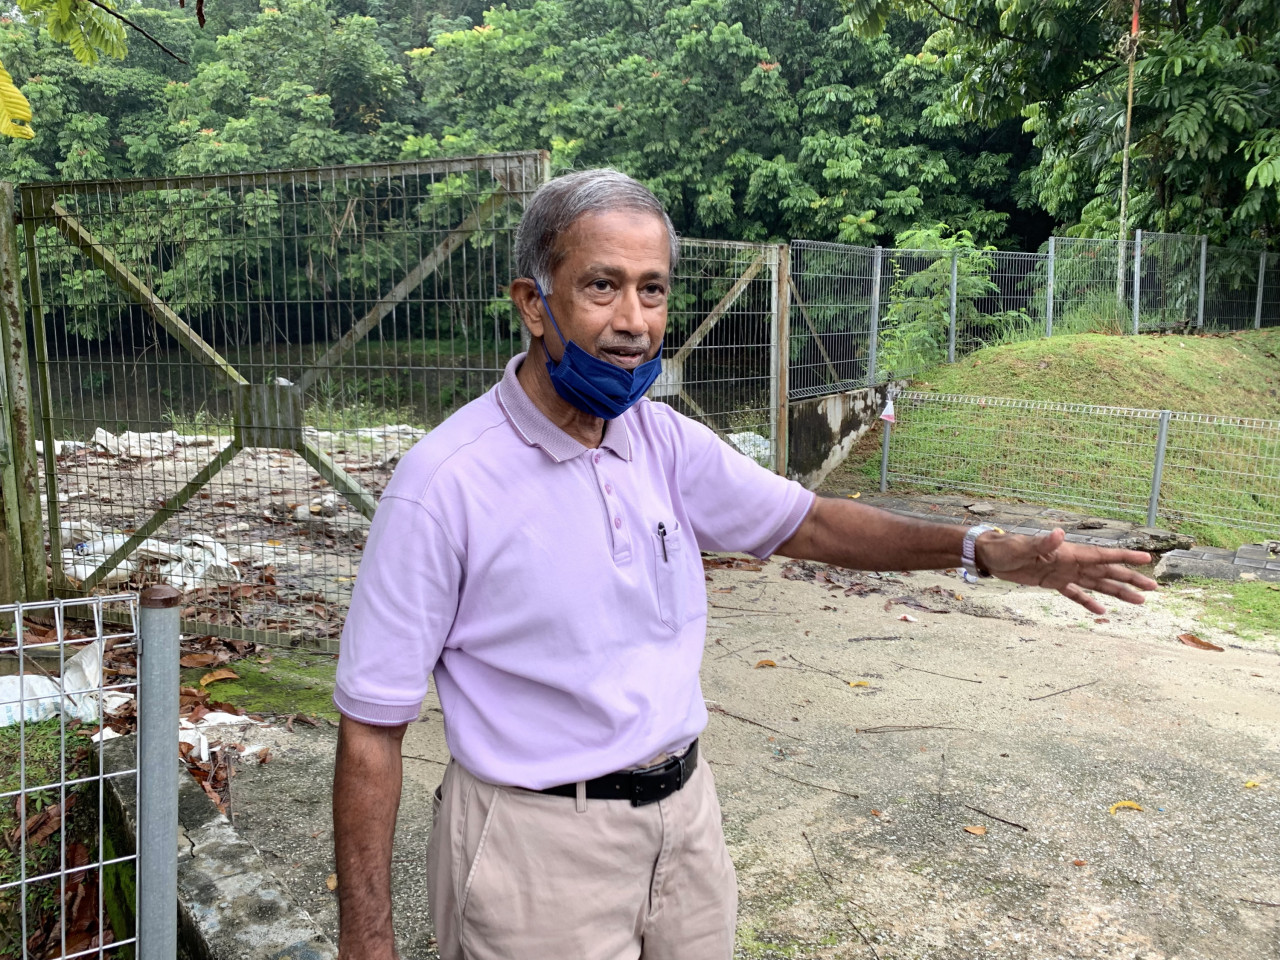 Bukit Bandaraya Residents’ Association adviser Datuk M. Ali briefs the media during a site visit to the Bangsar water retention pond. – AMAR SHAH MOHSEN/The Vibes pic, September 9, 2022